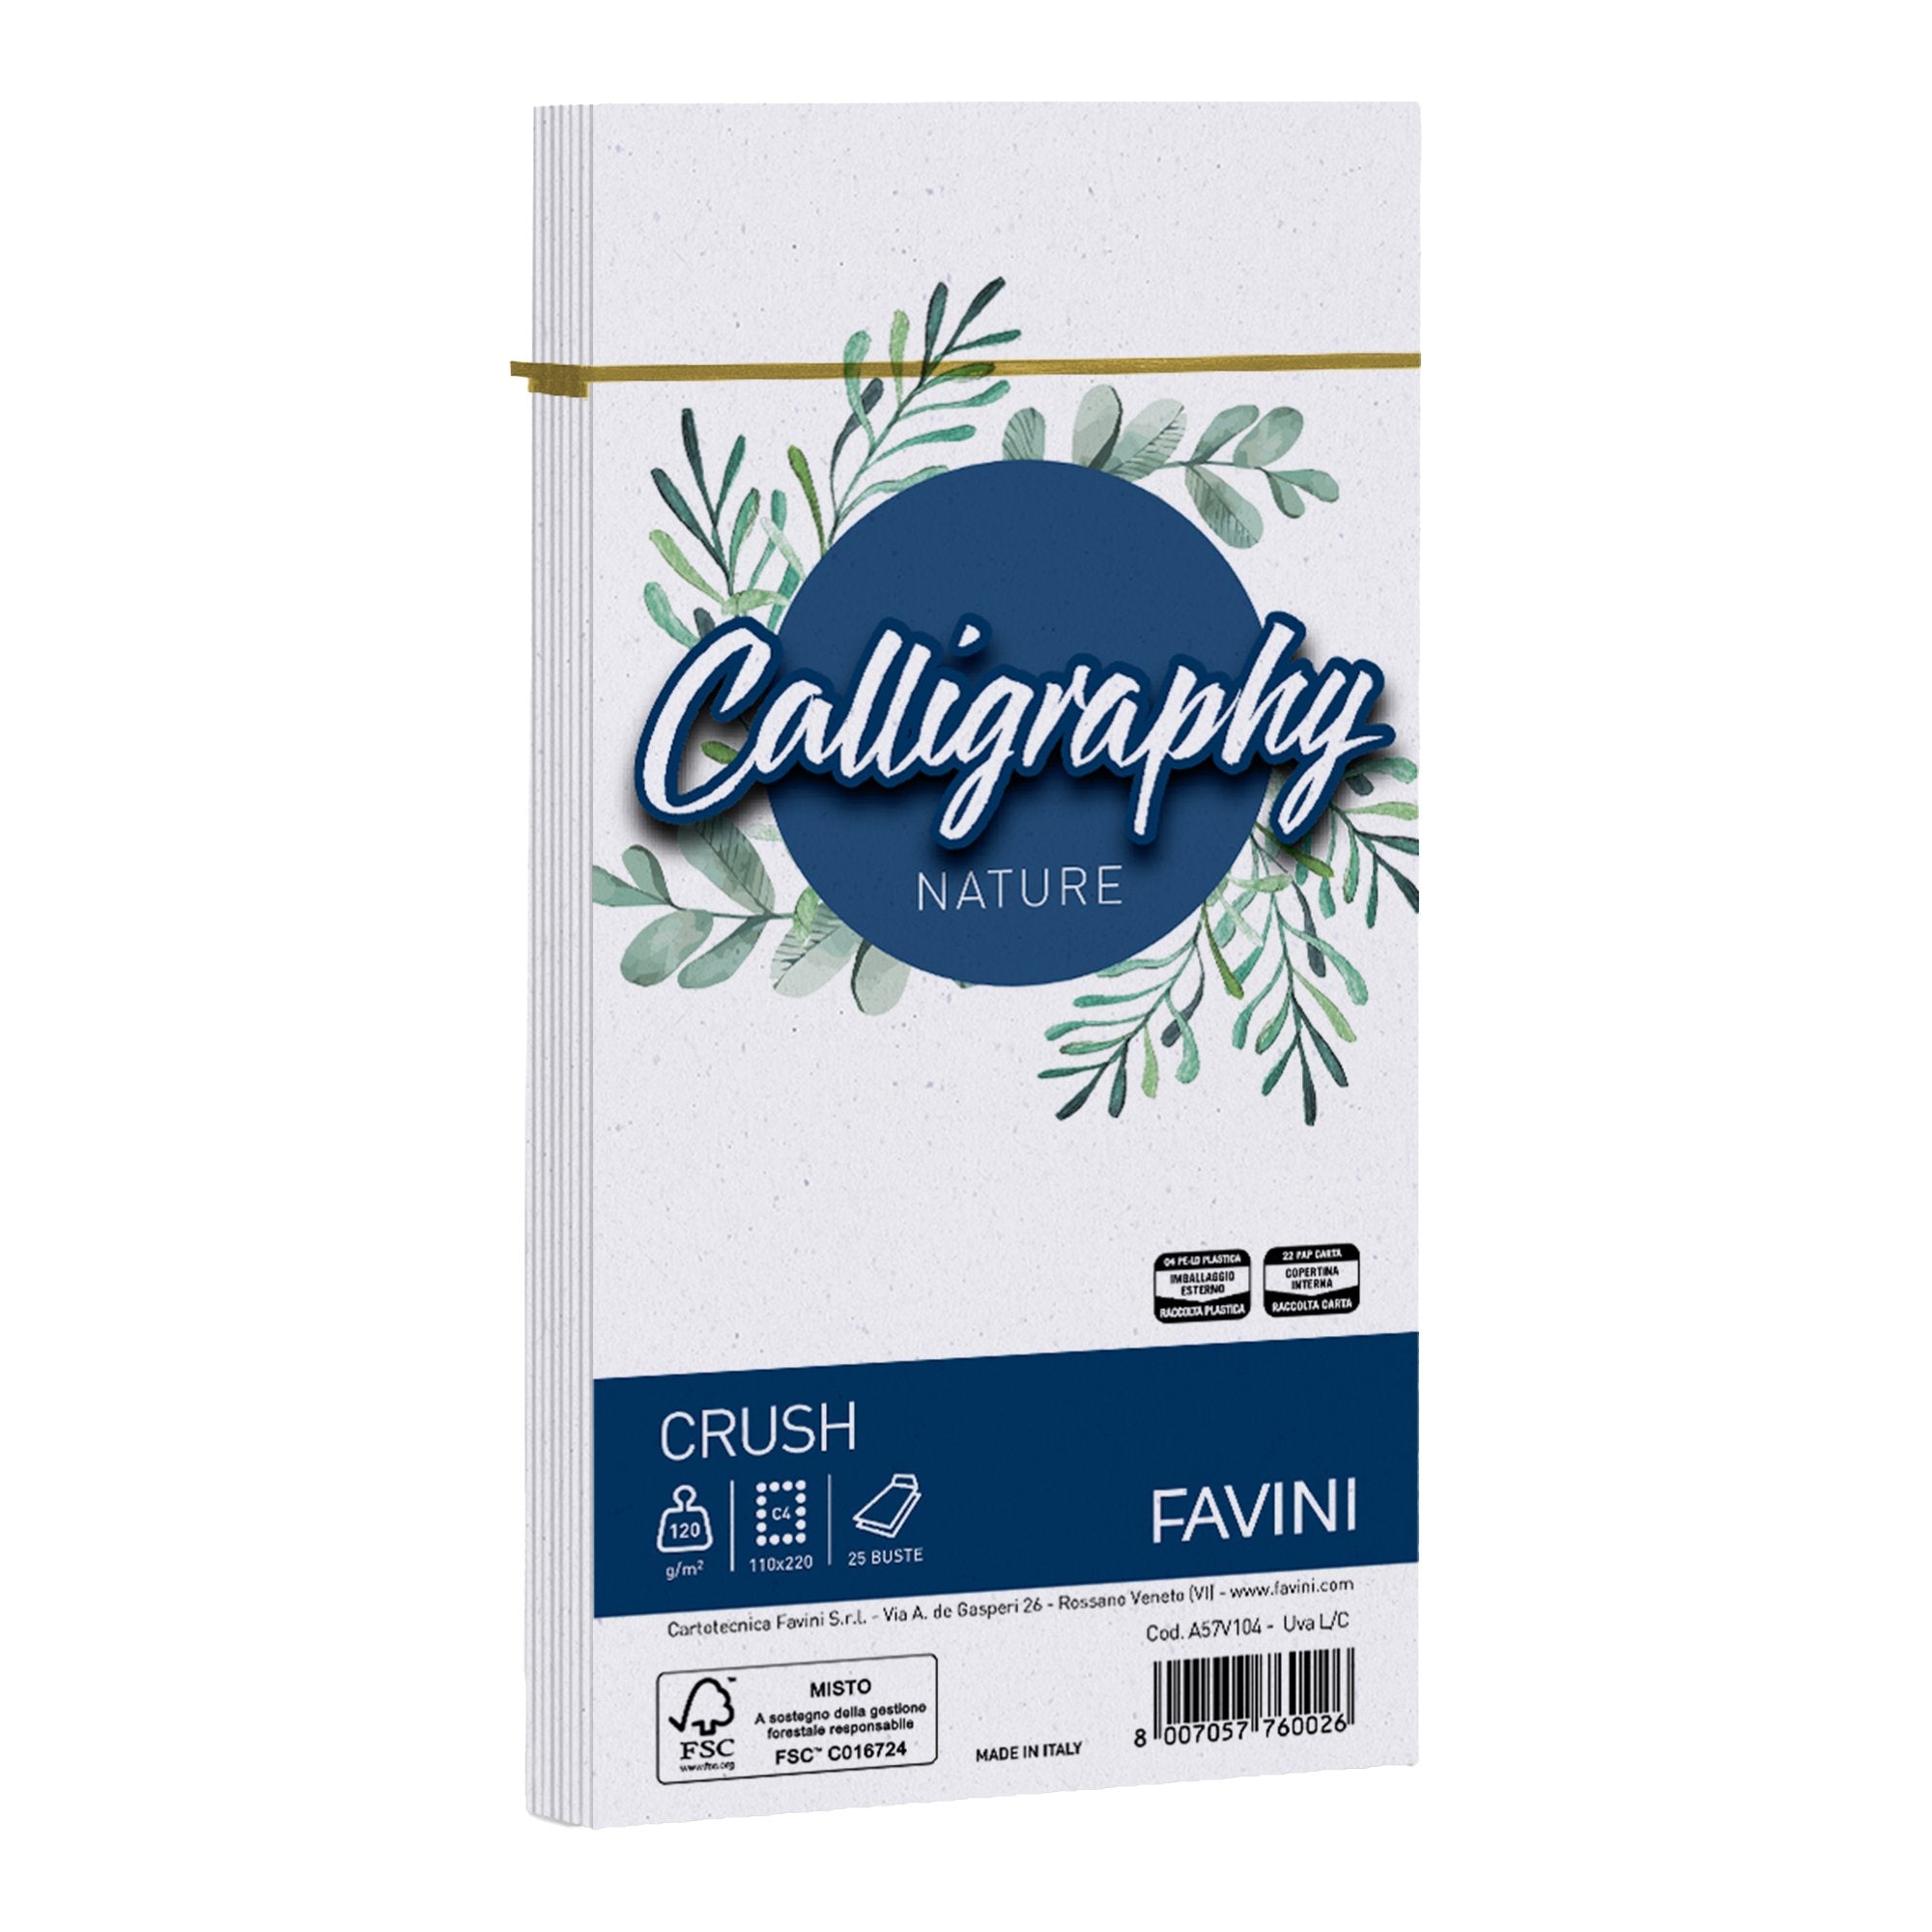 favini-25-buste-calligraphy-nature-crush-120gr-110x220mm-uva